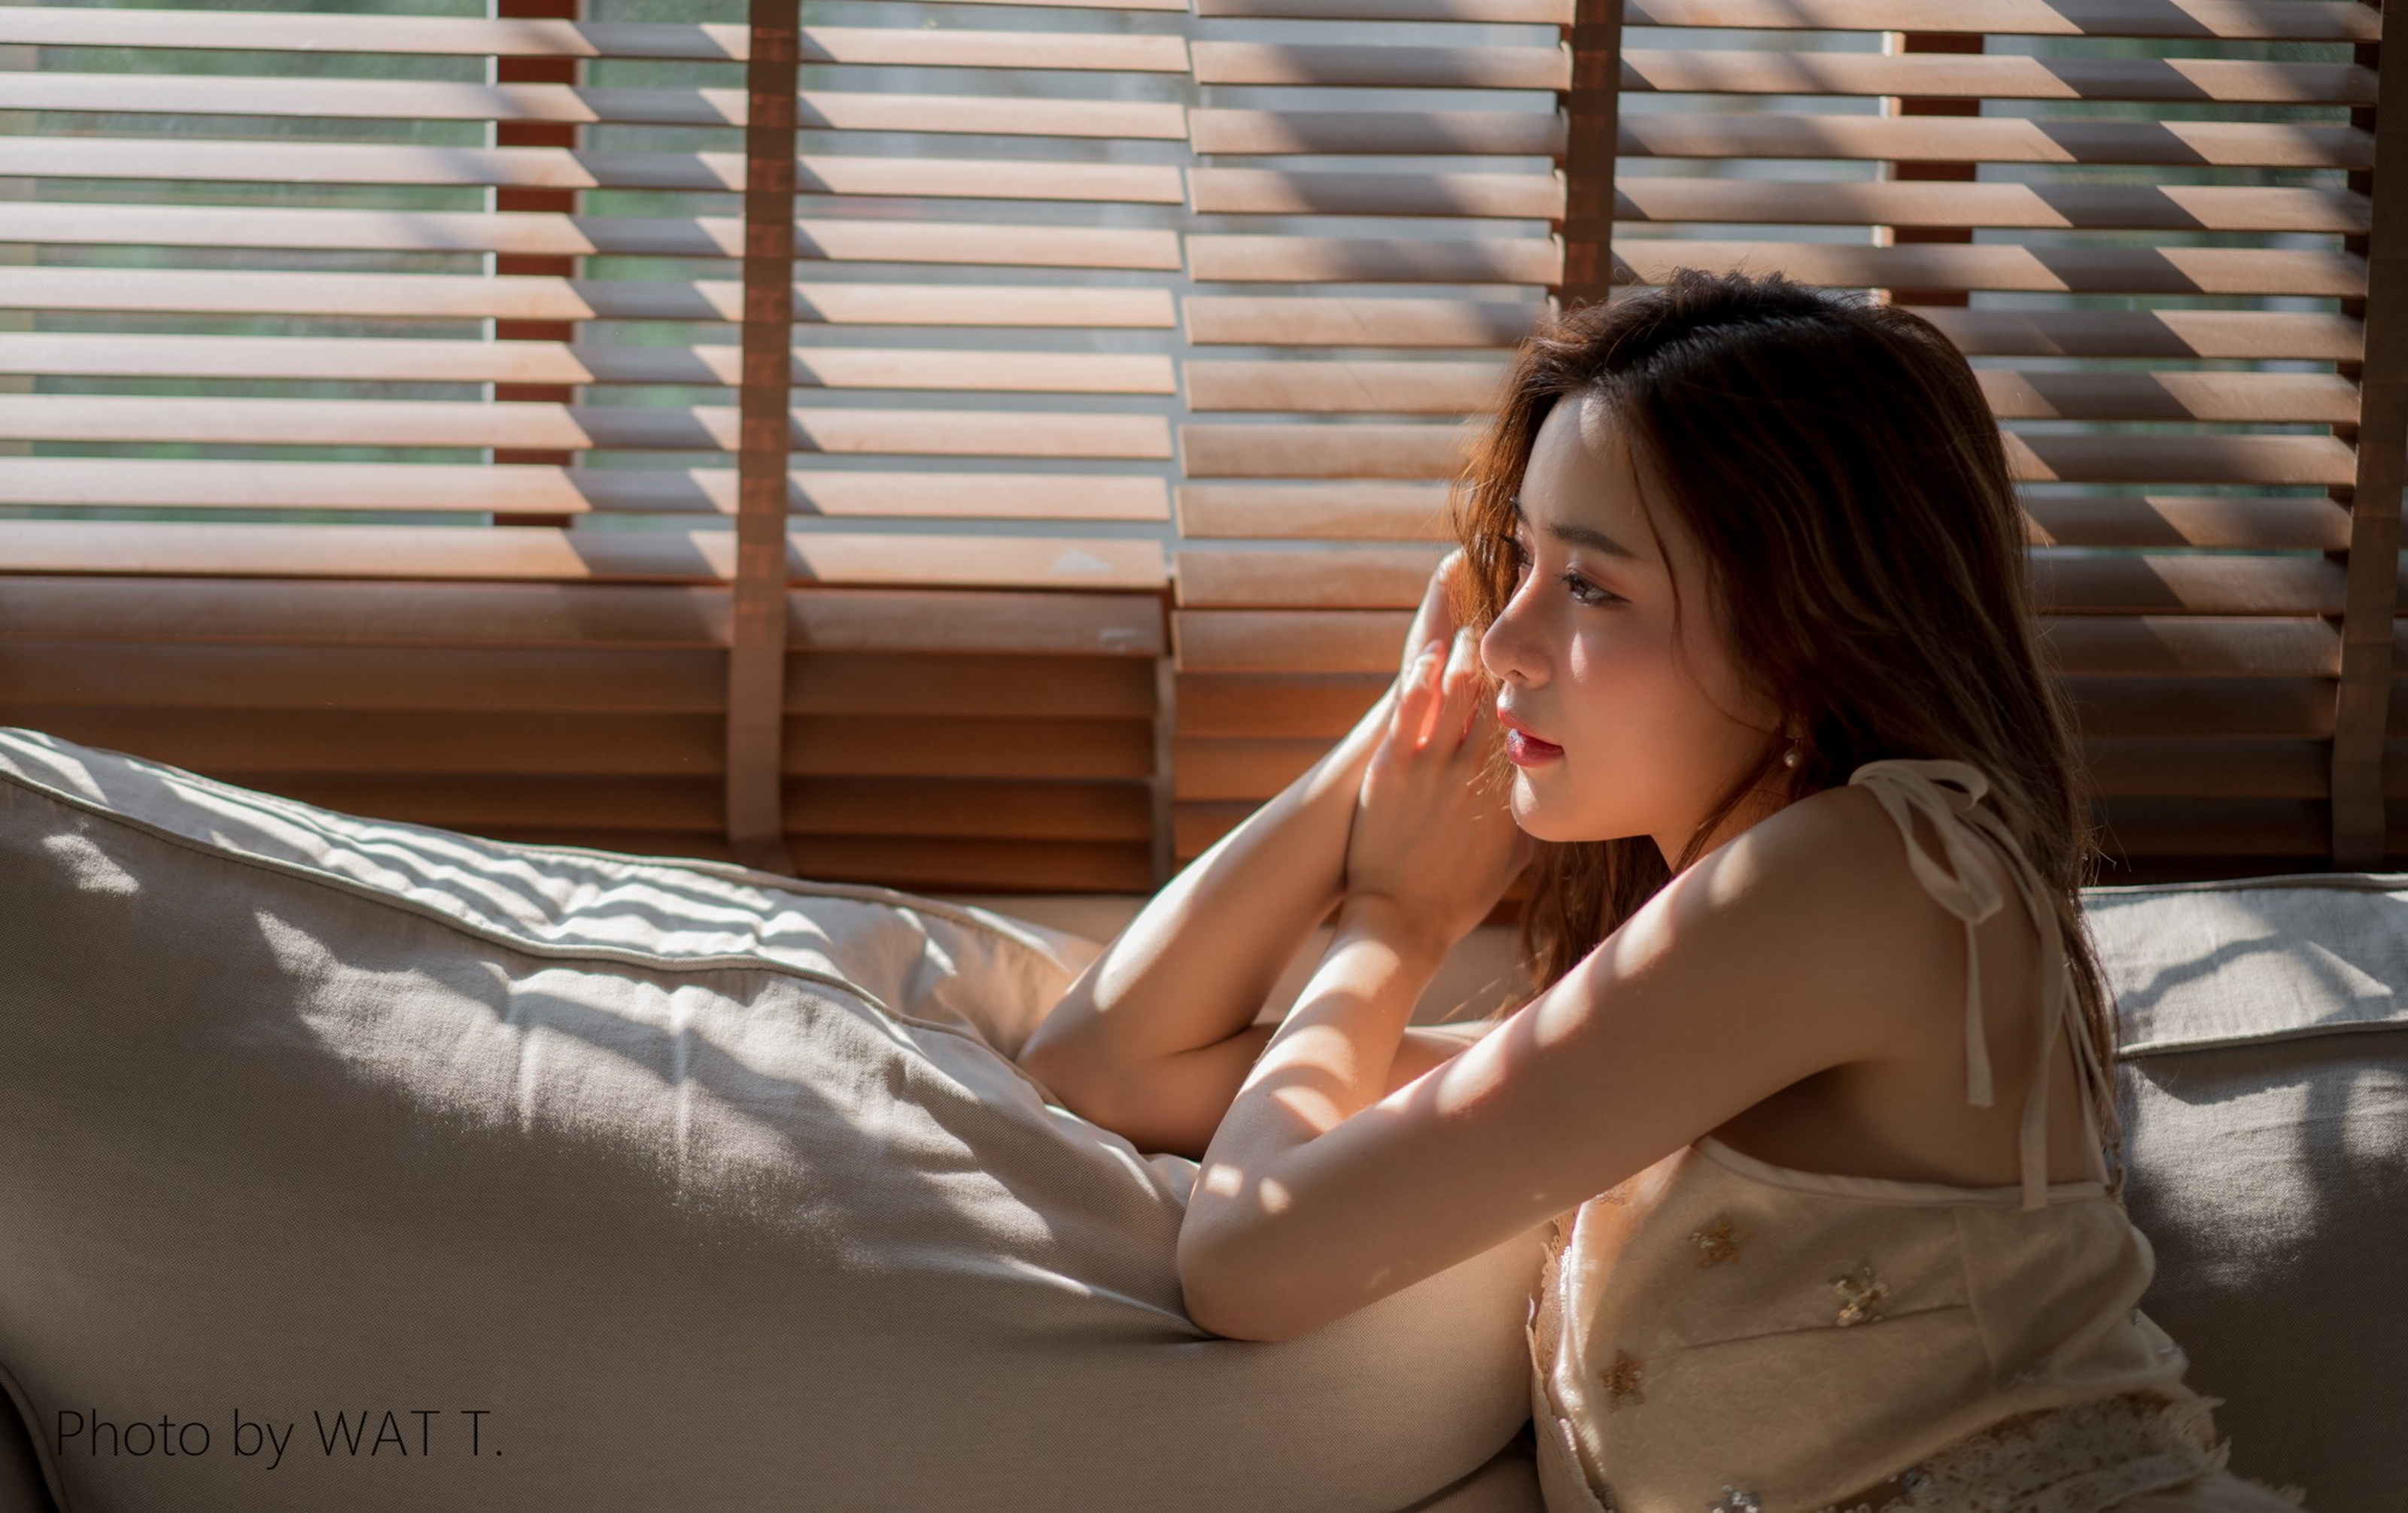 Asian Model Women Long Hair Brunette Leaning Pillow Blinds Dress 3200x2011